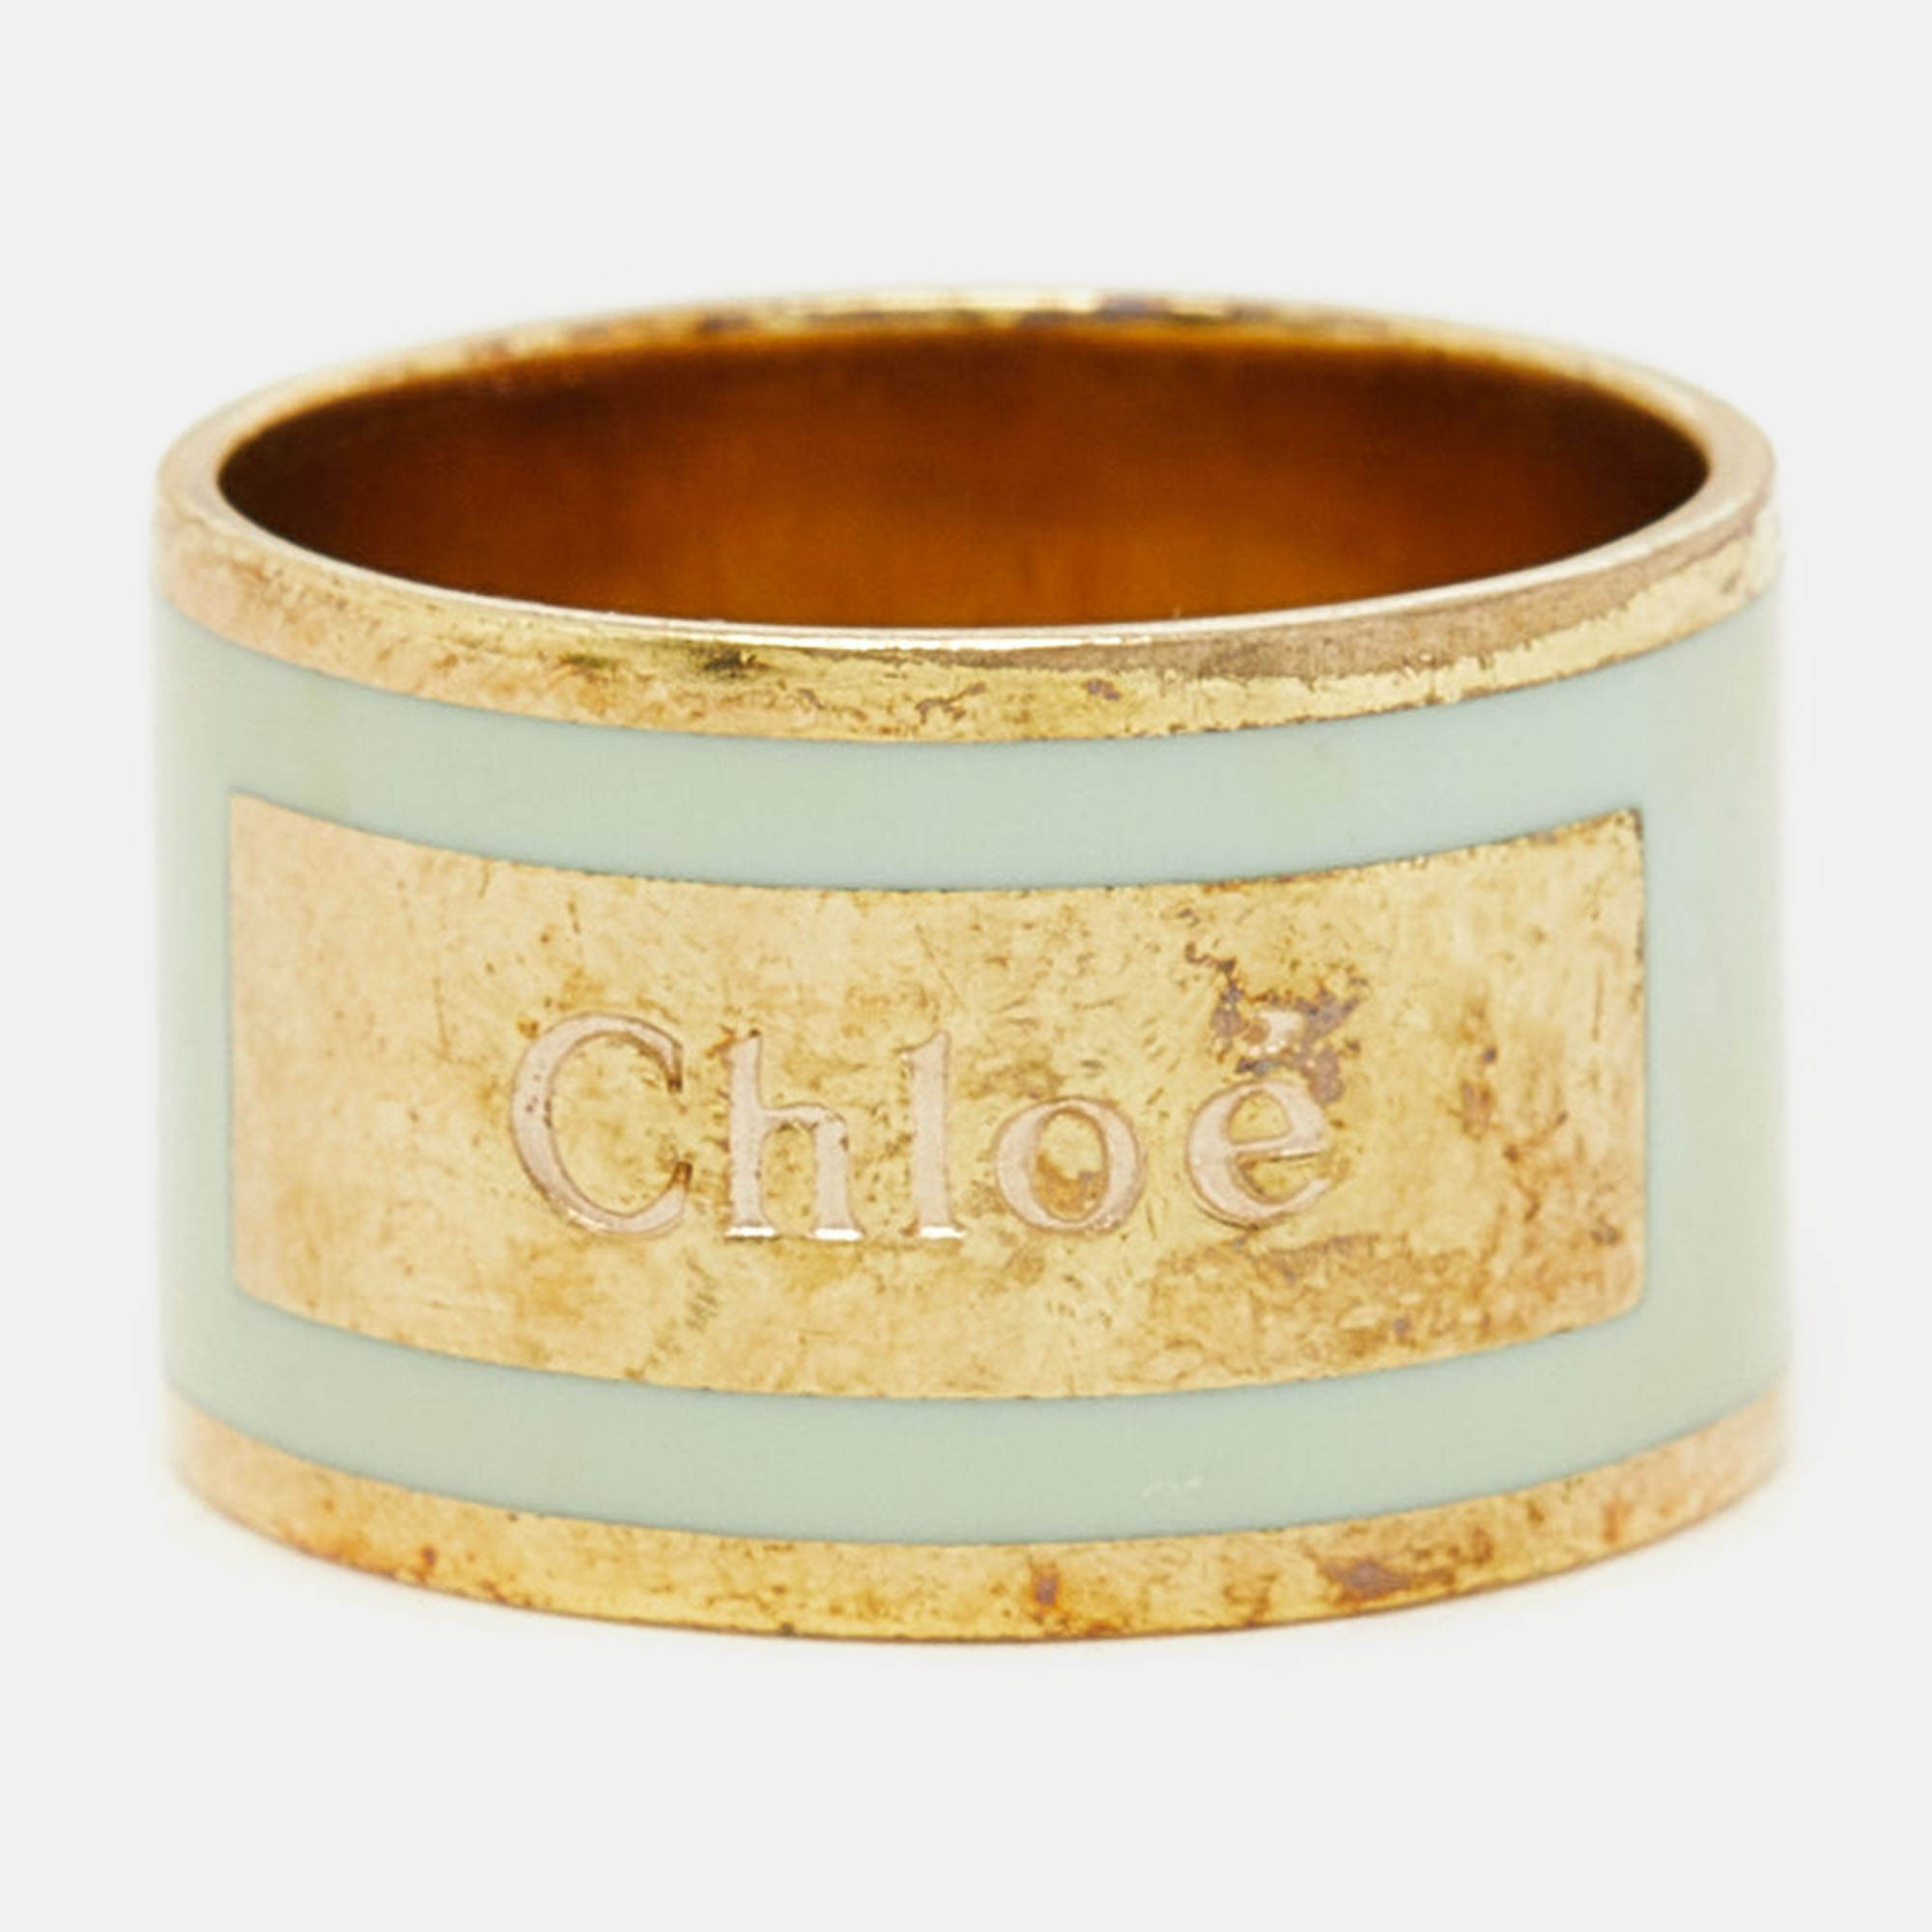 

Chloé Mint Green Enamel Gold Tone Band Ring Size EU 53